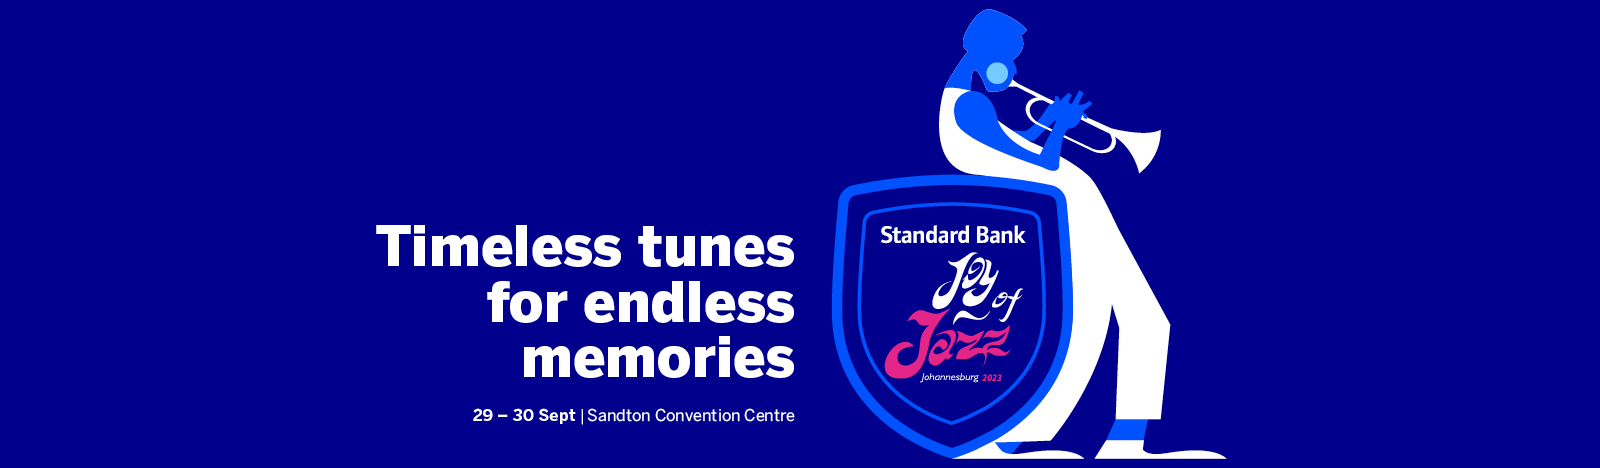 Joy of Jazz_Saxophone_hero banner